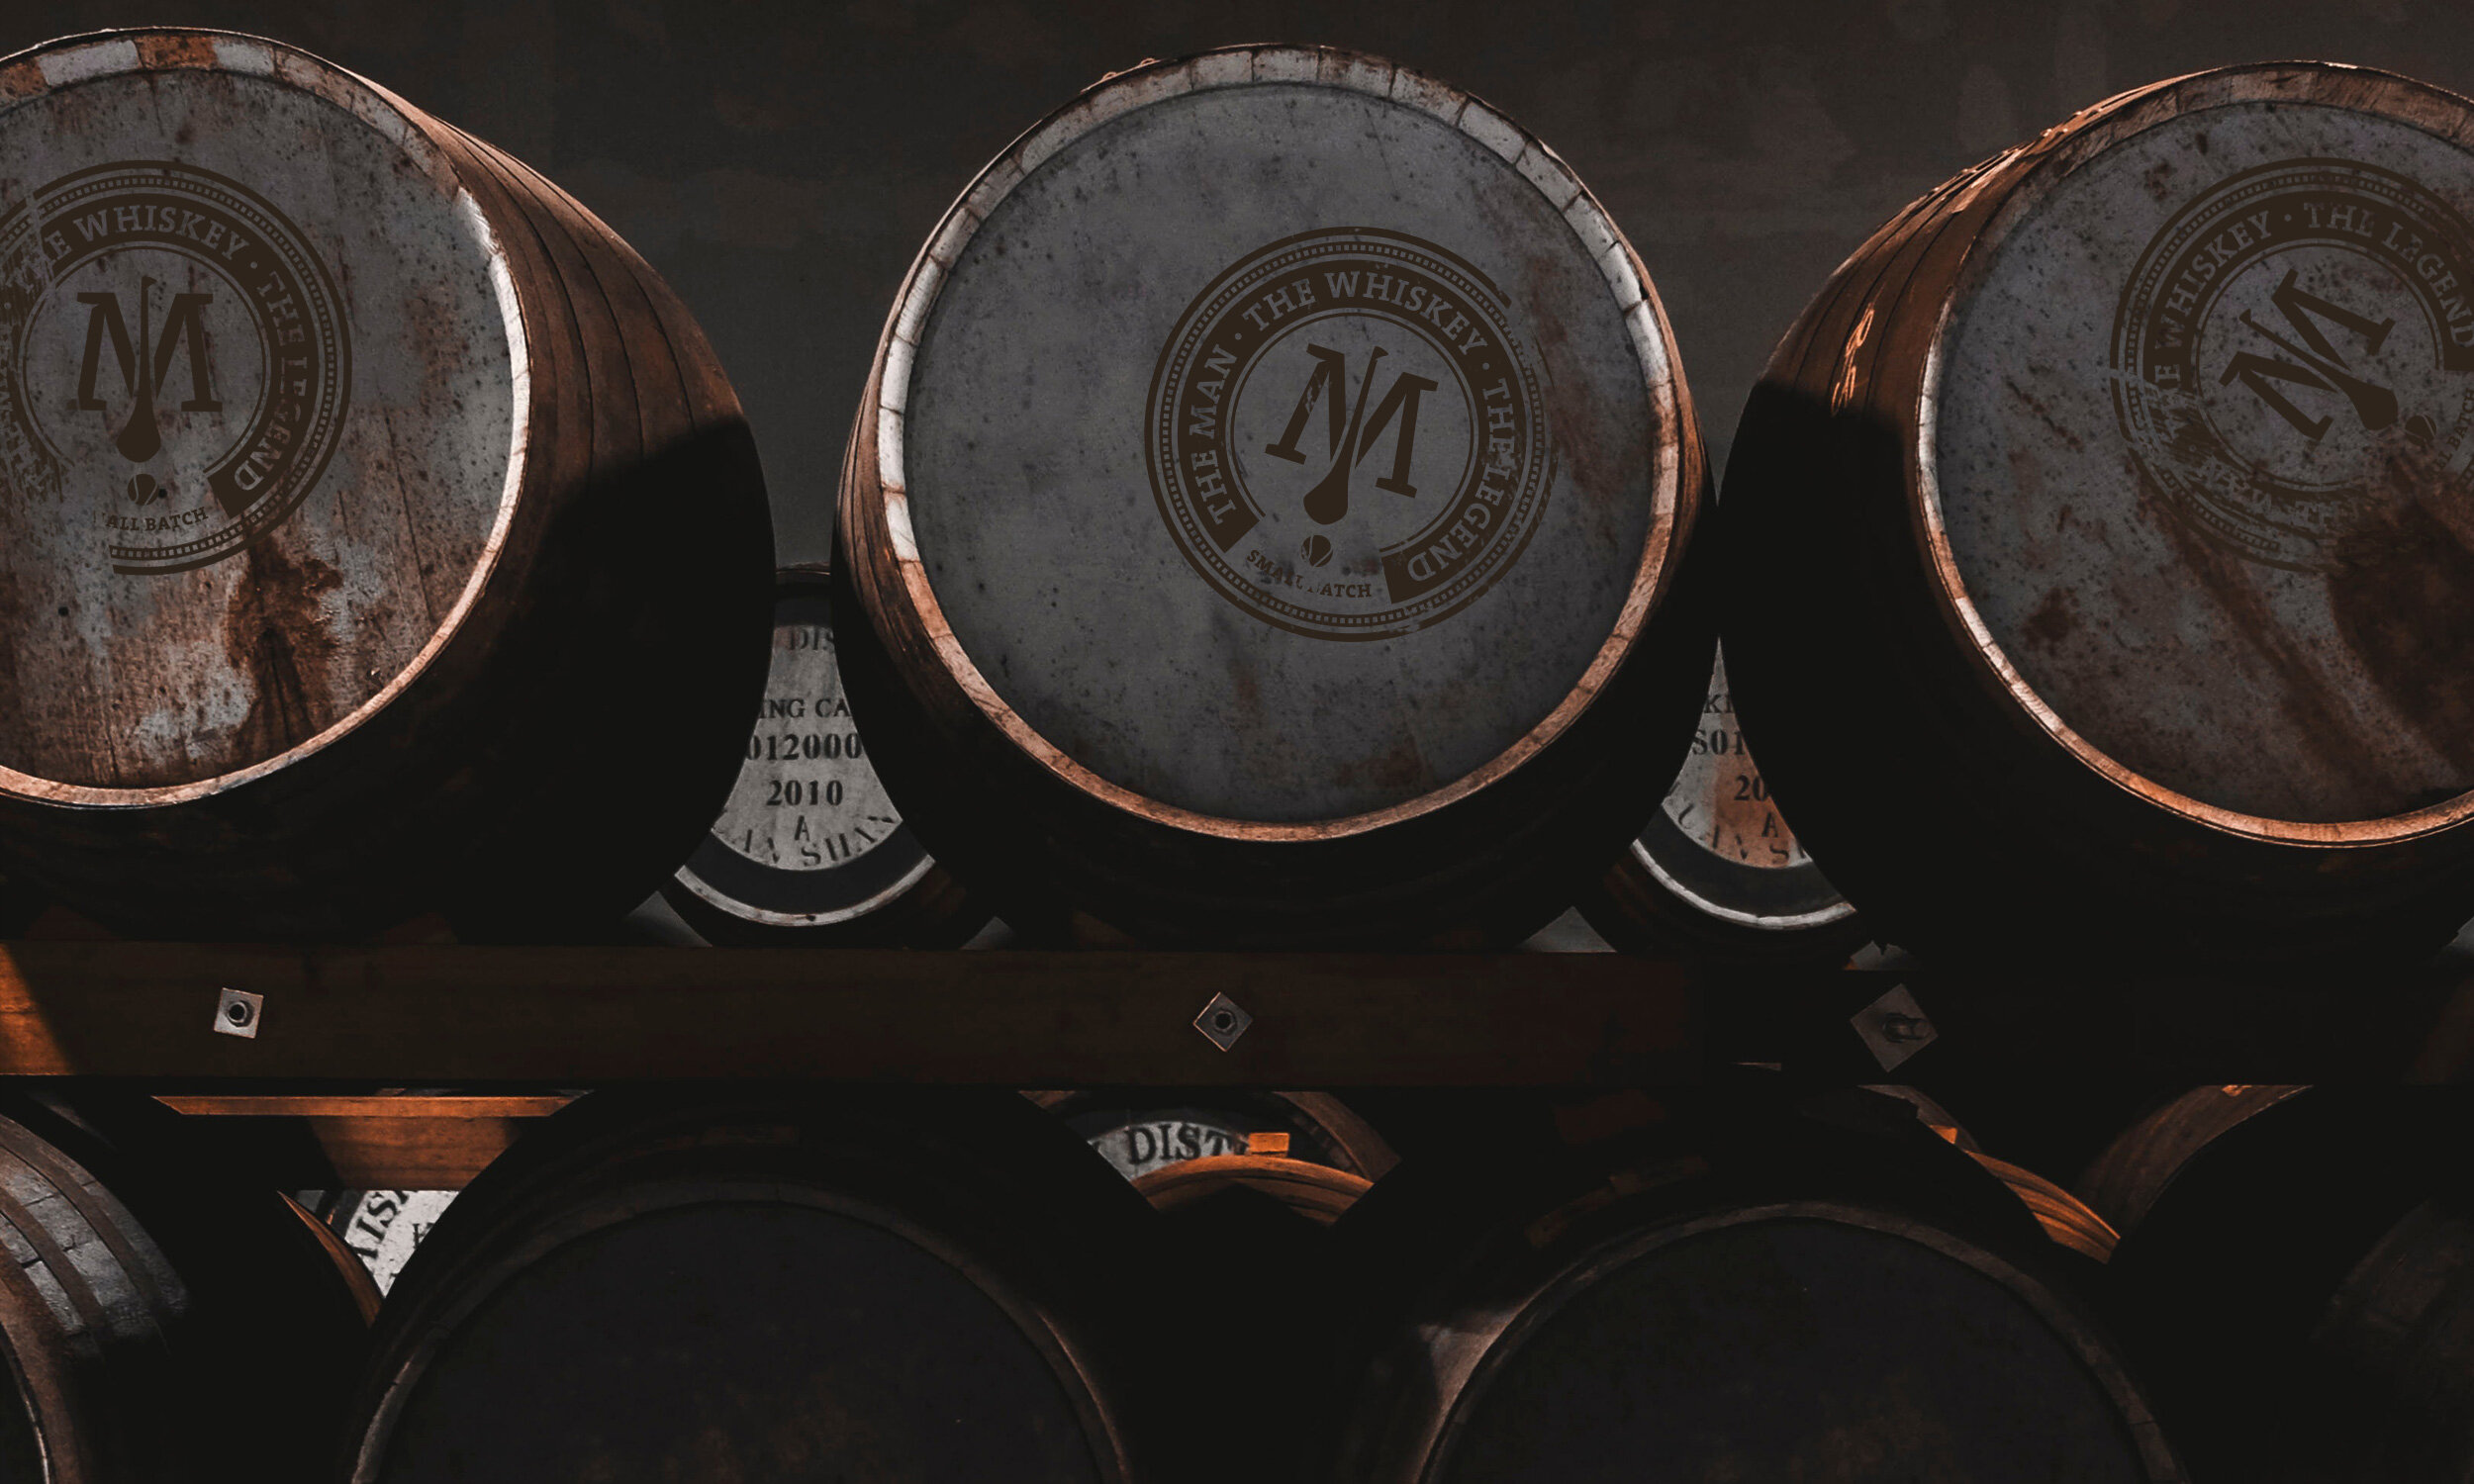 Oloroso Sherry barrels